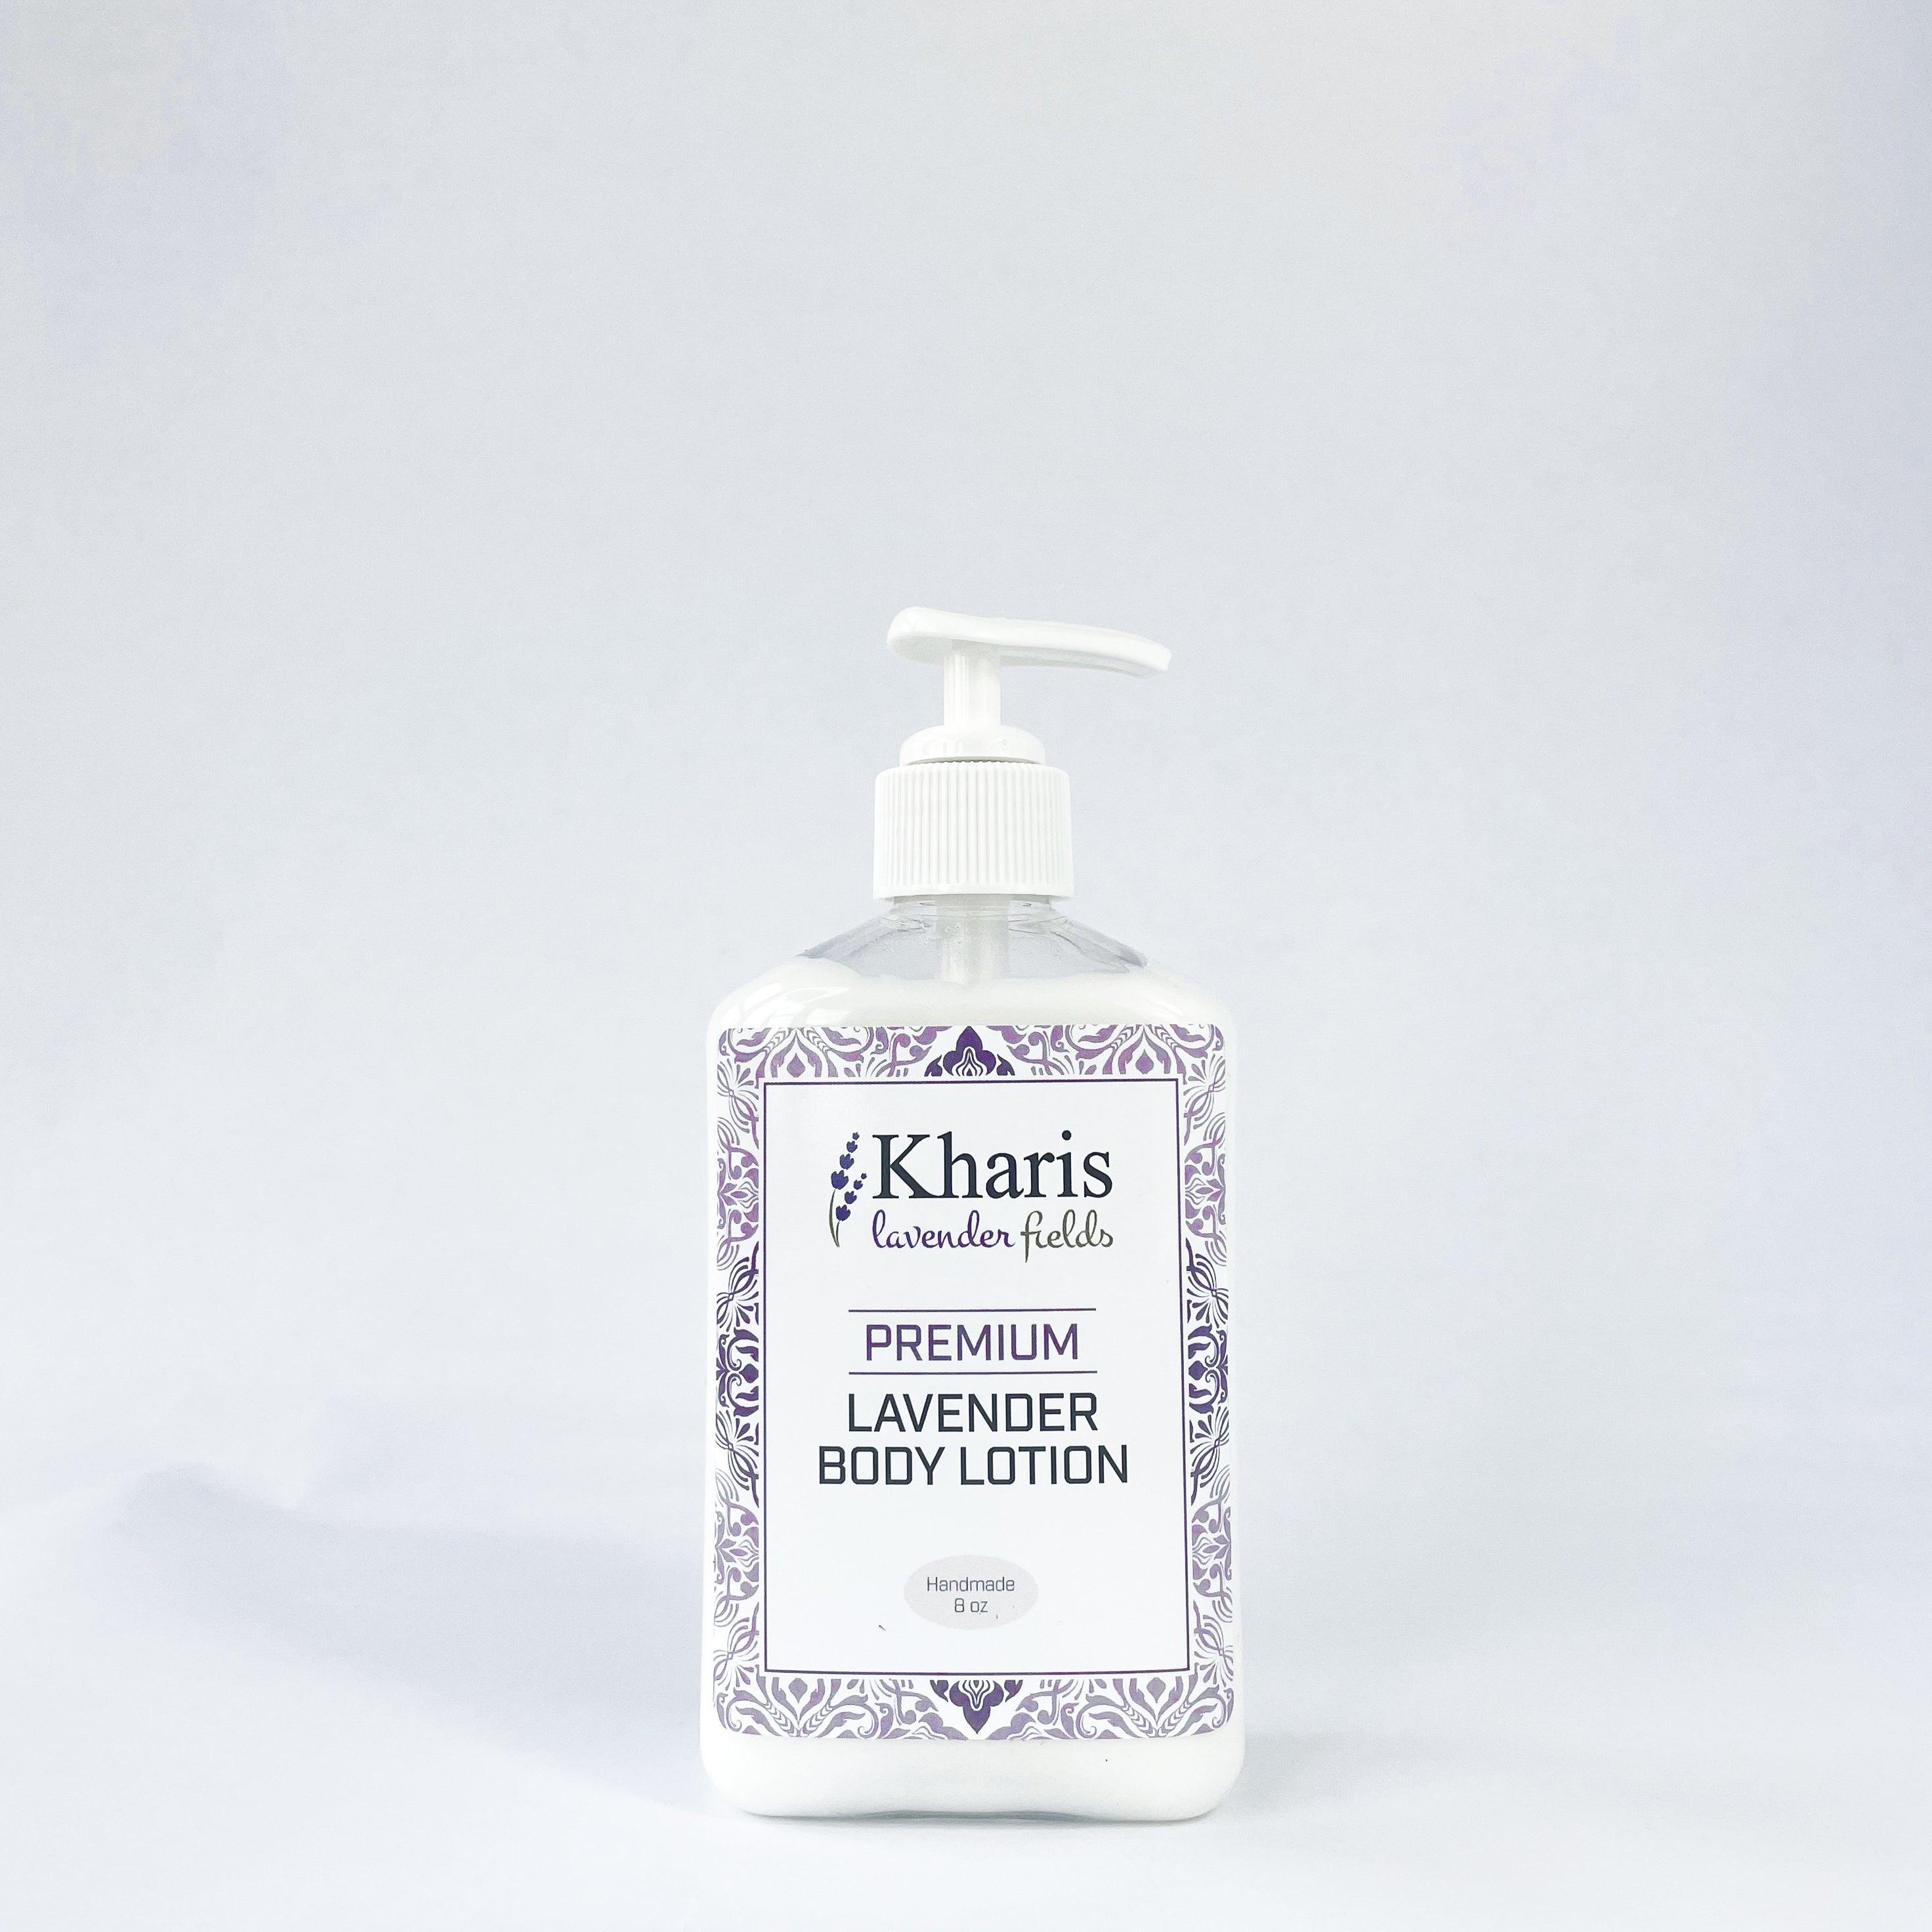 Premium Lavender Body Lotion - Kharislavender